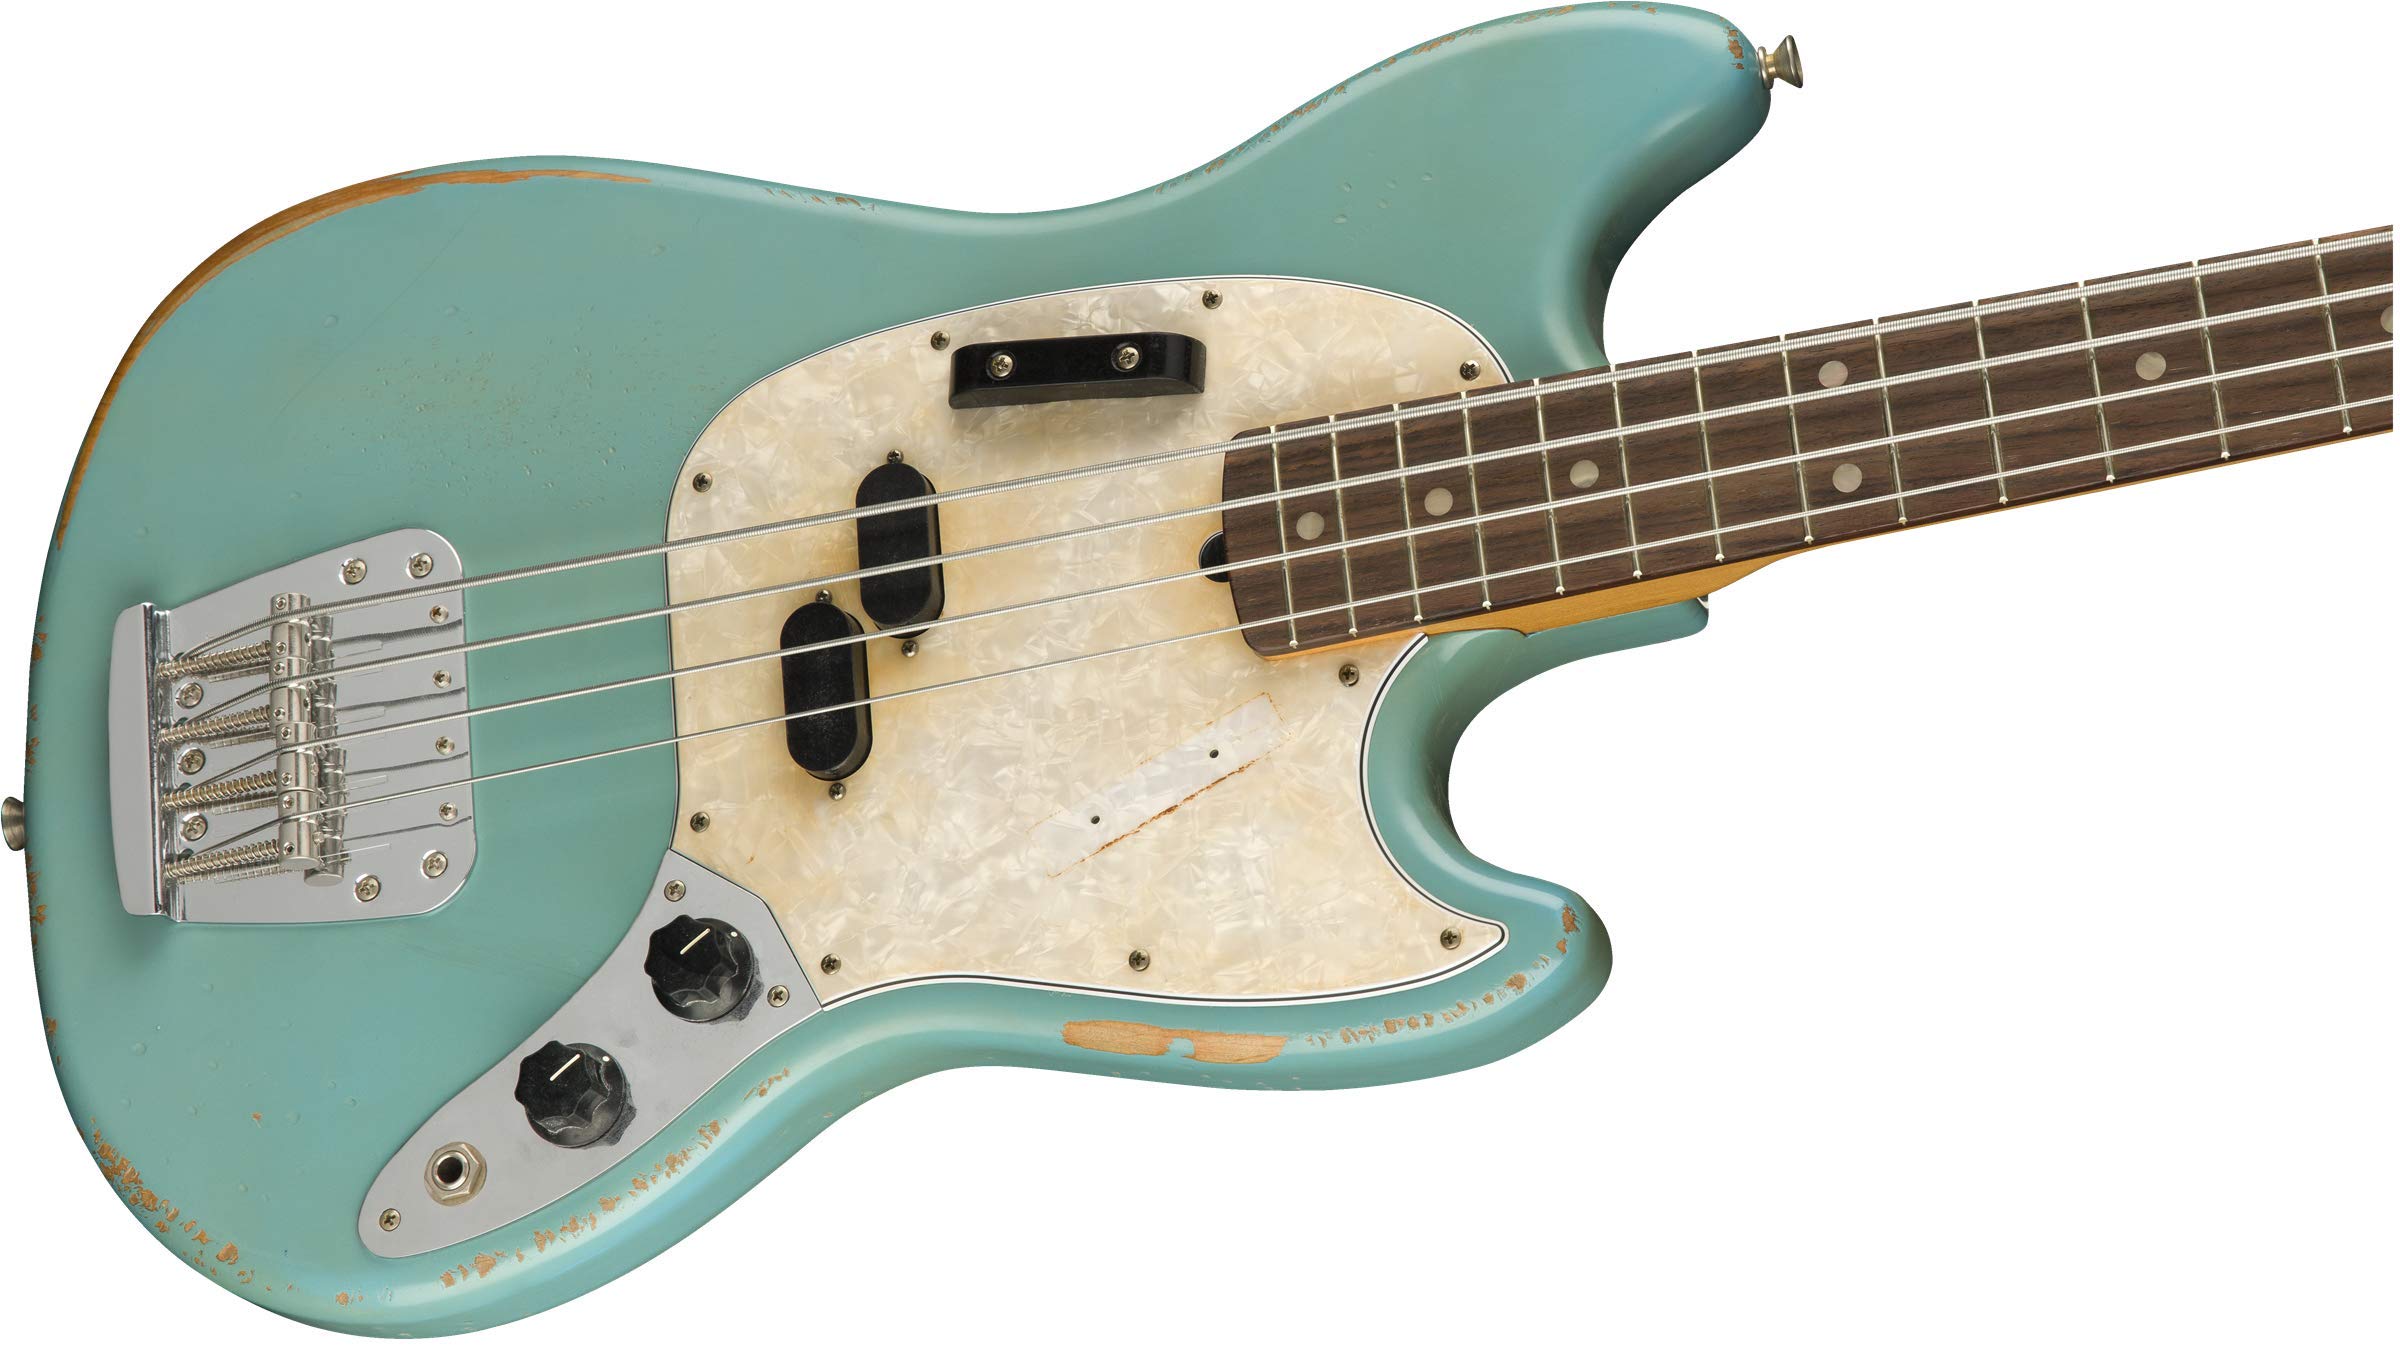 Fender JMJ Road Worn Mustang Bass, Faded Daphne Blue, Rosewood Fingerboard $945 on Amazon.com